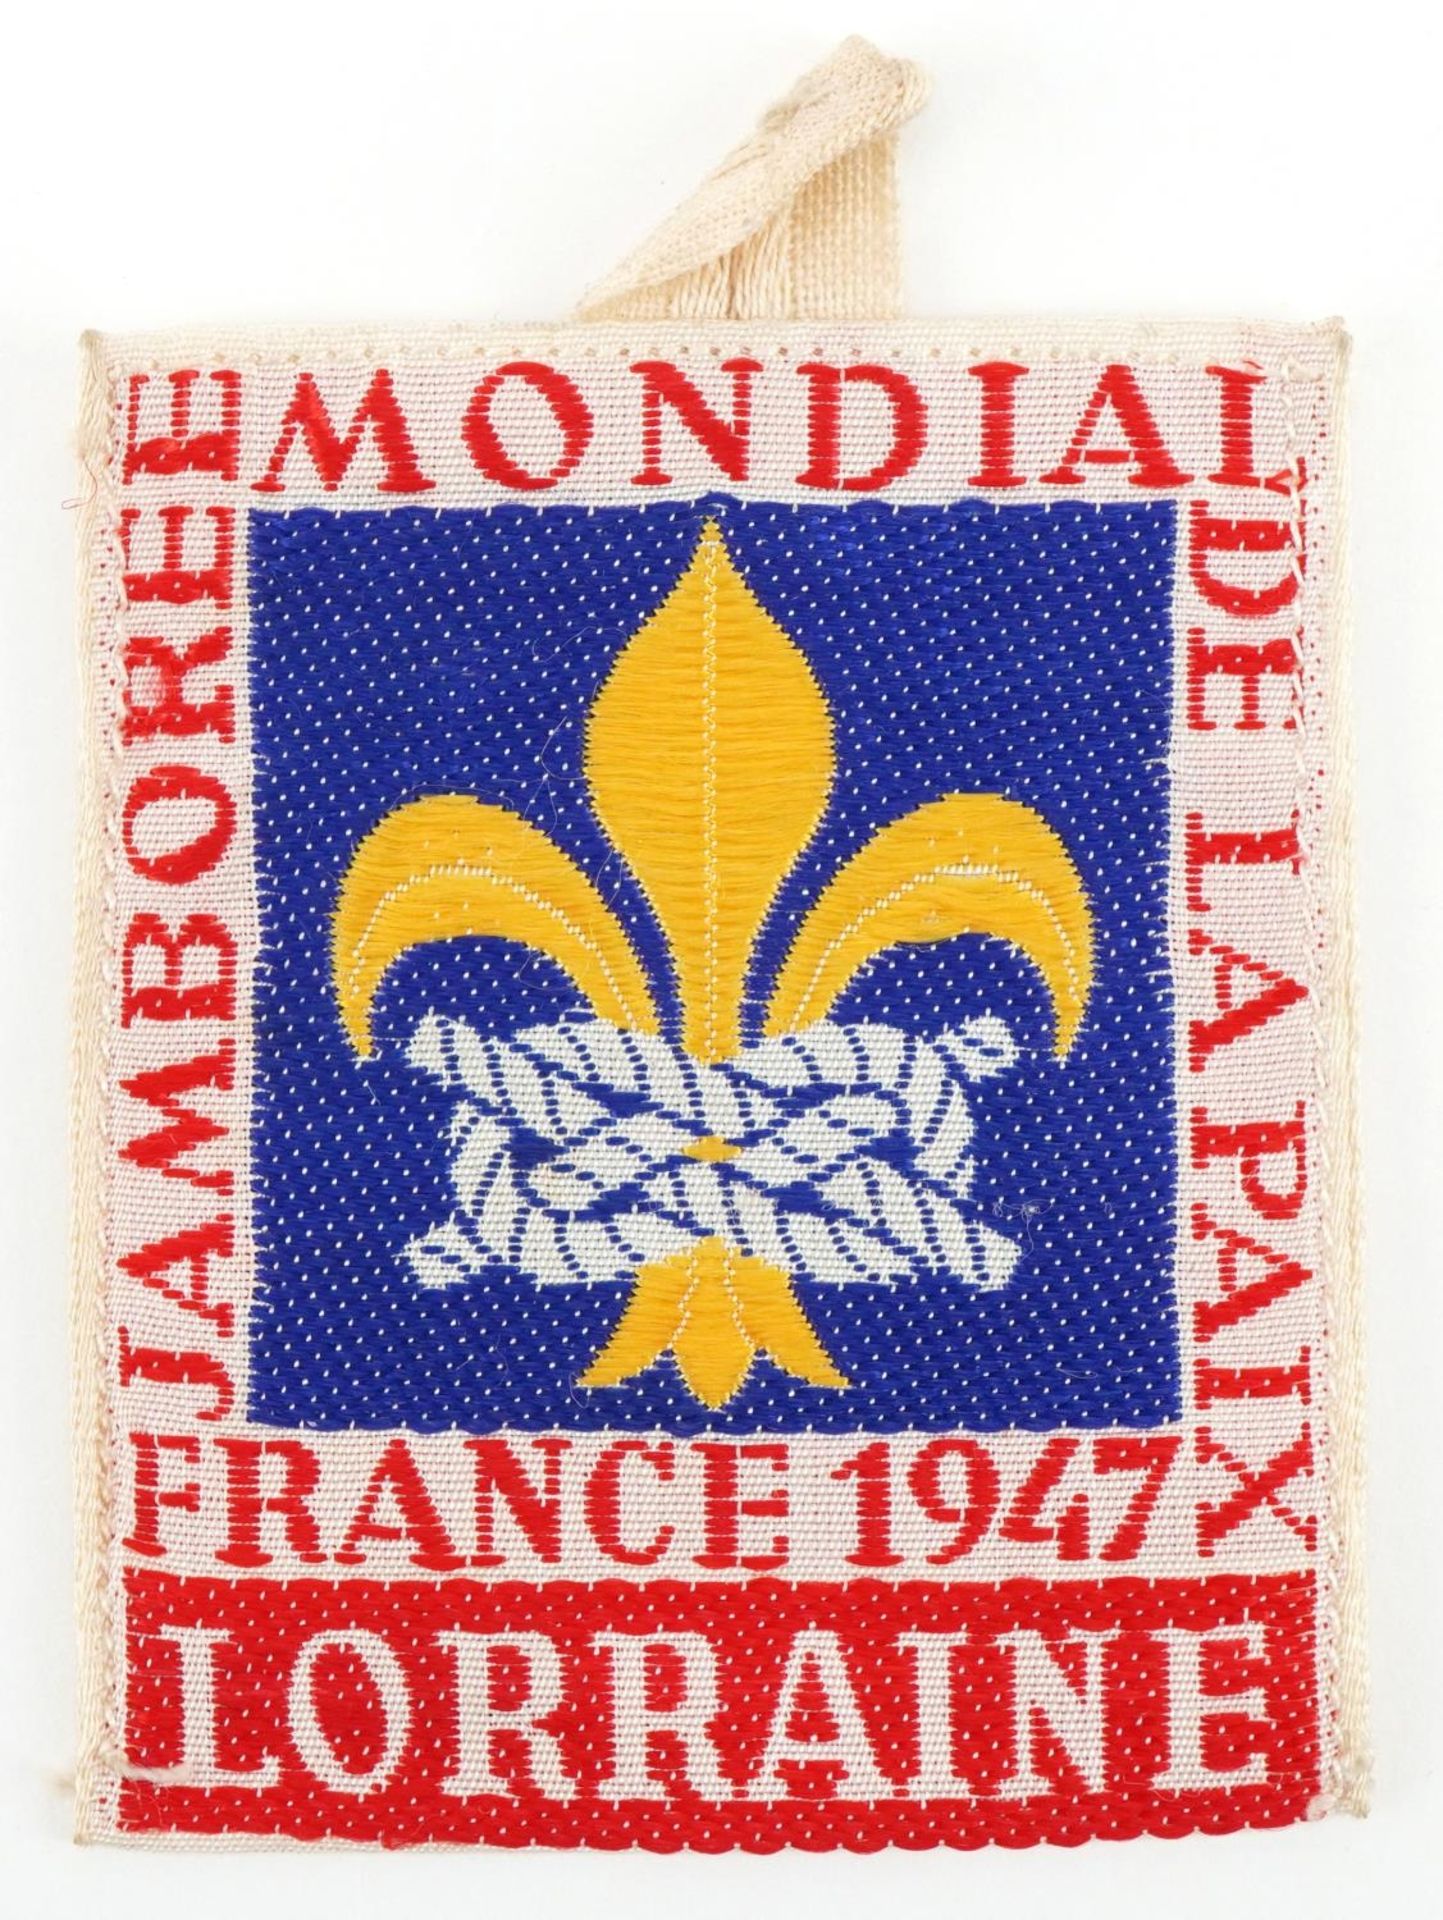 Vintage French 1947 Jamboree Mondial de La Paix Lorraine jamboree badge : For further information on